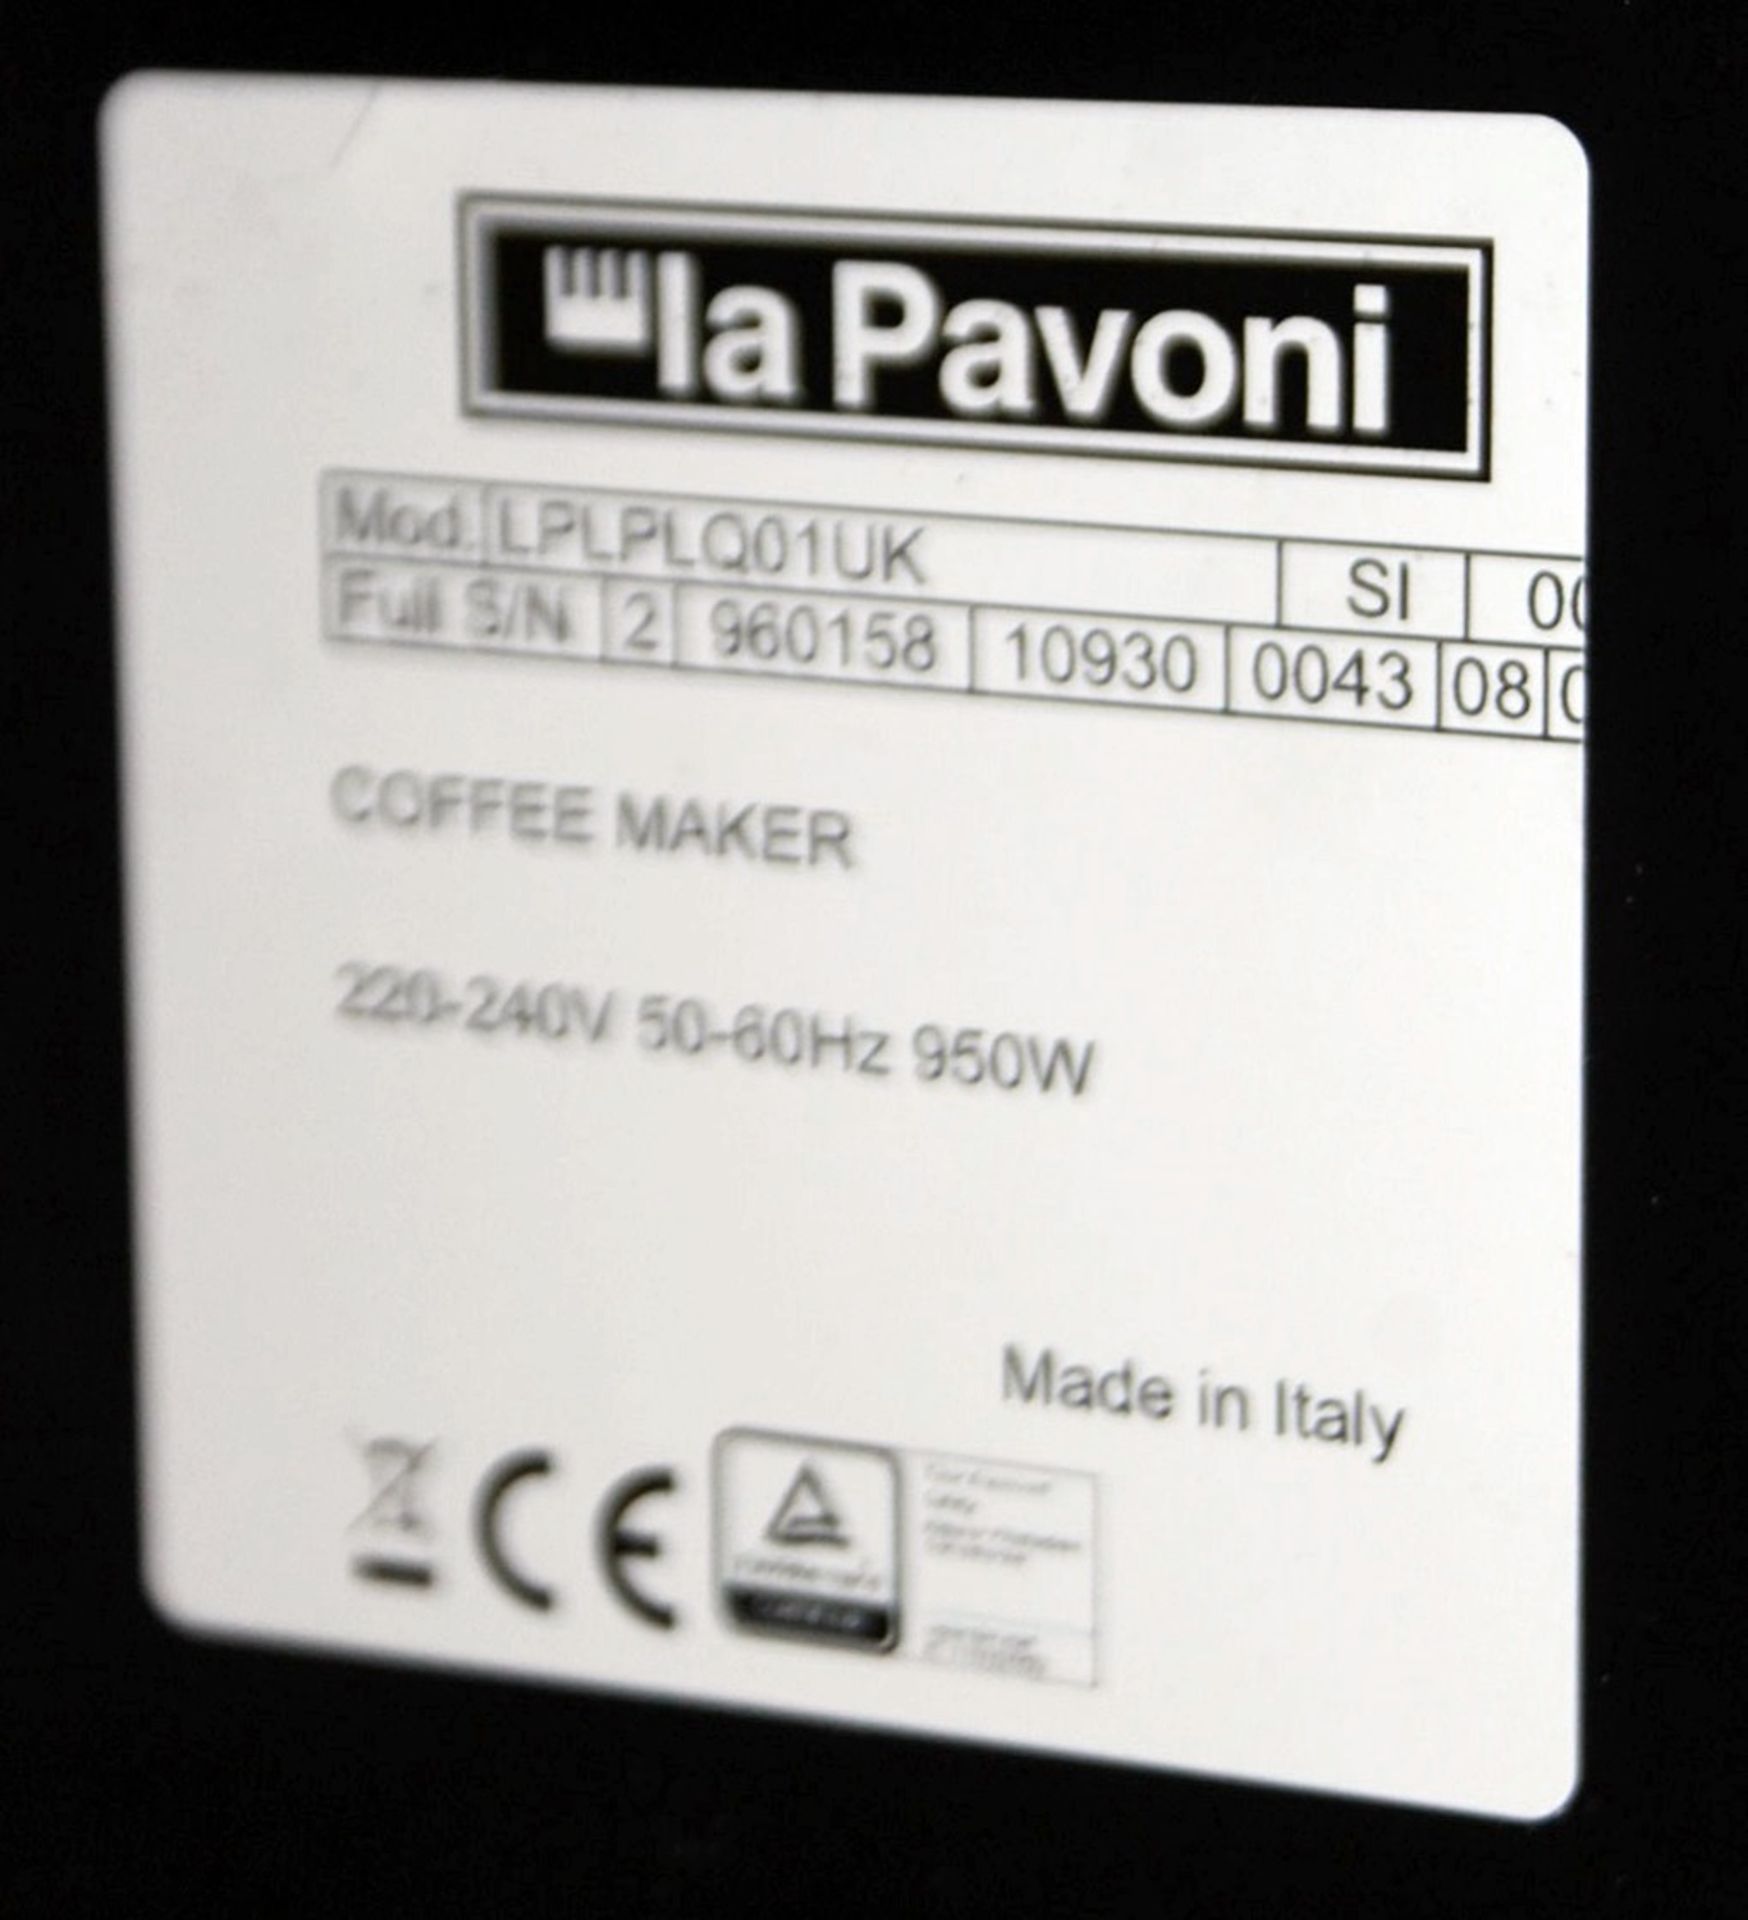 1 x LA PAVONI Professional Lusso Coffee Machine - Original Price £849.95 - Ex-display / Boxed - Image 12 of 14